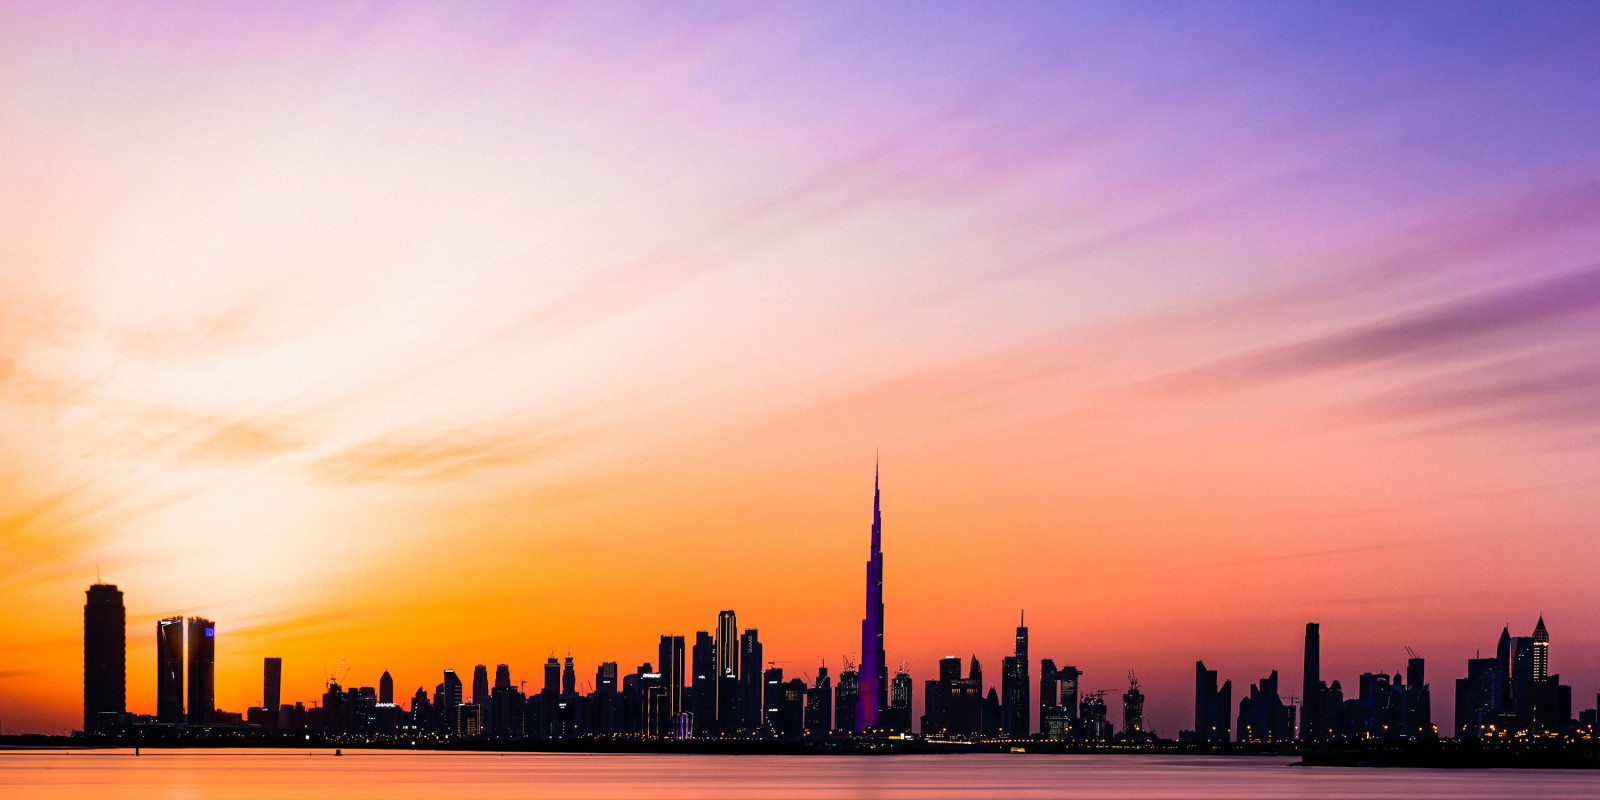 Dubai Building Silhouette